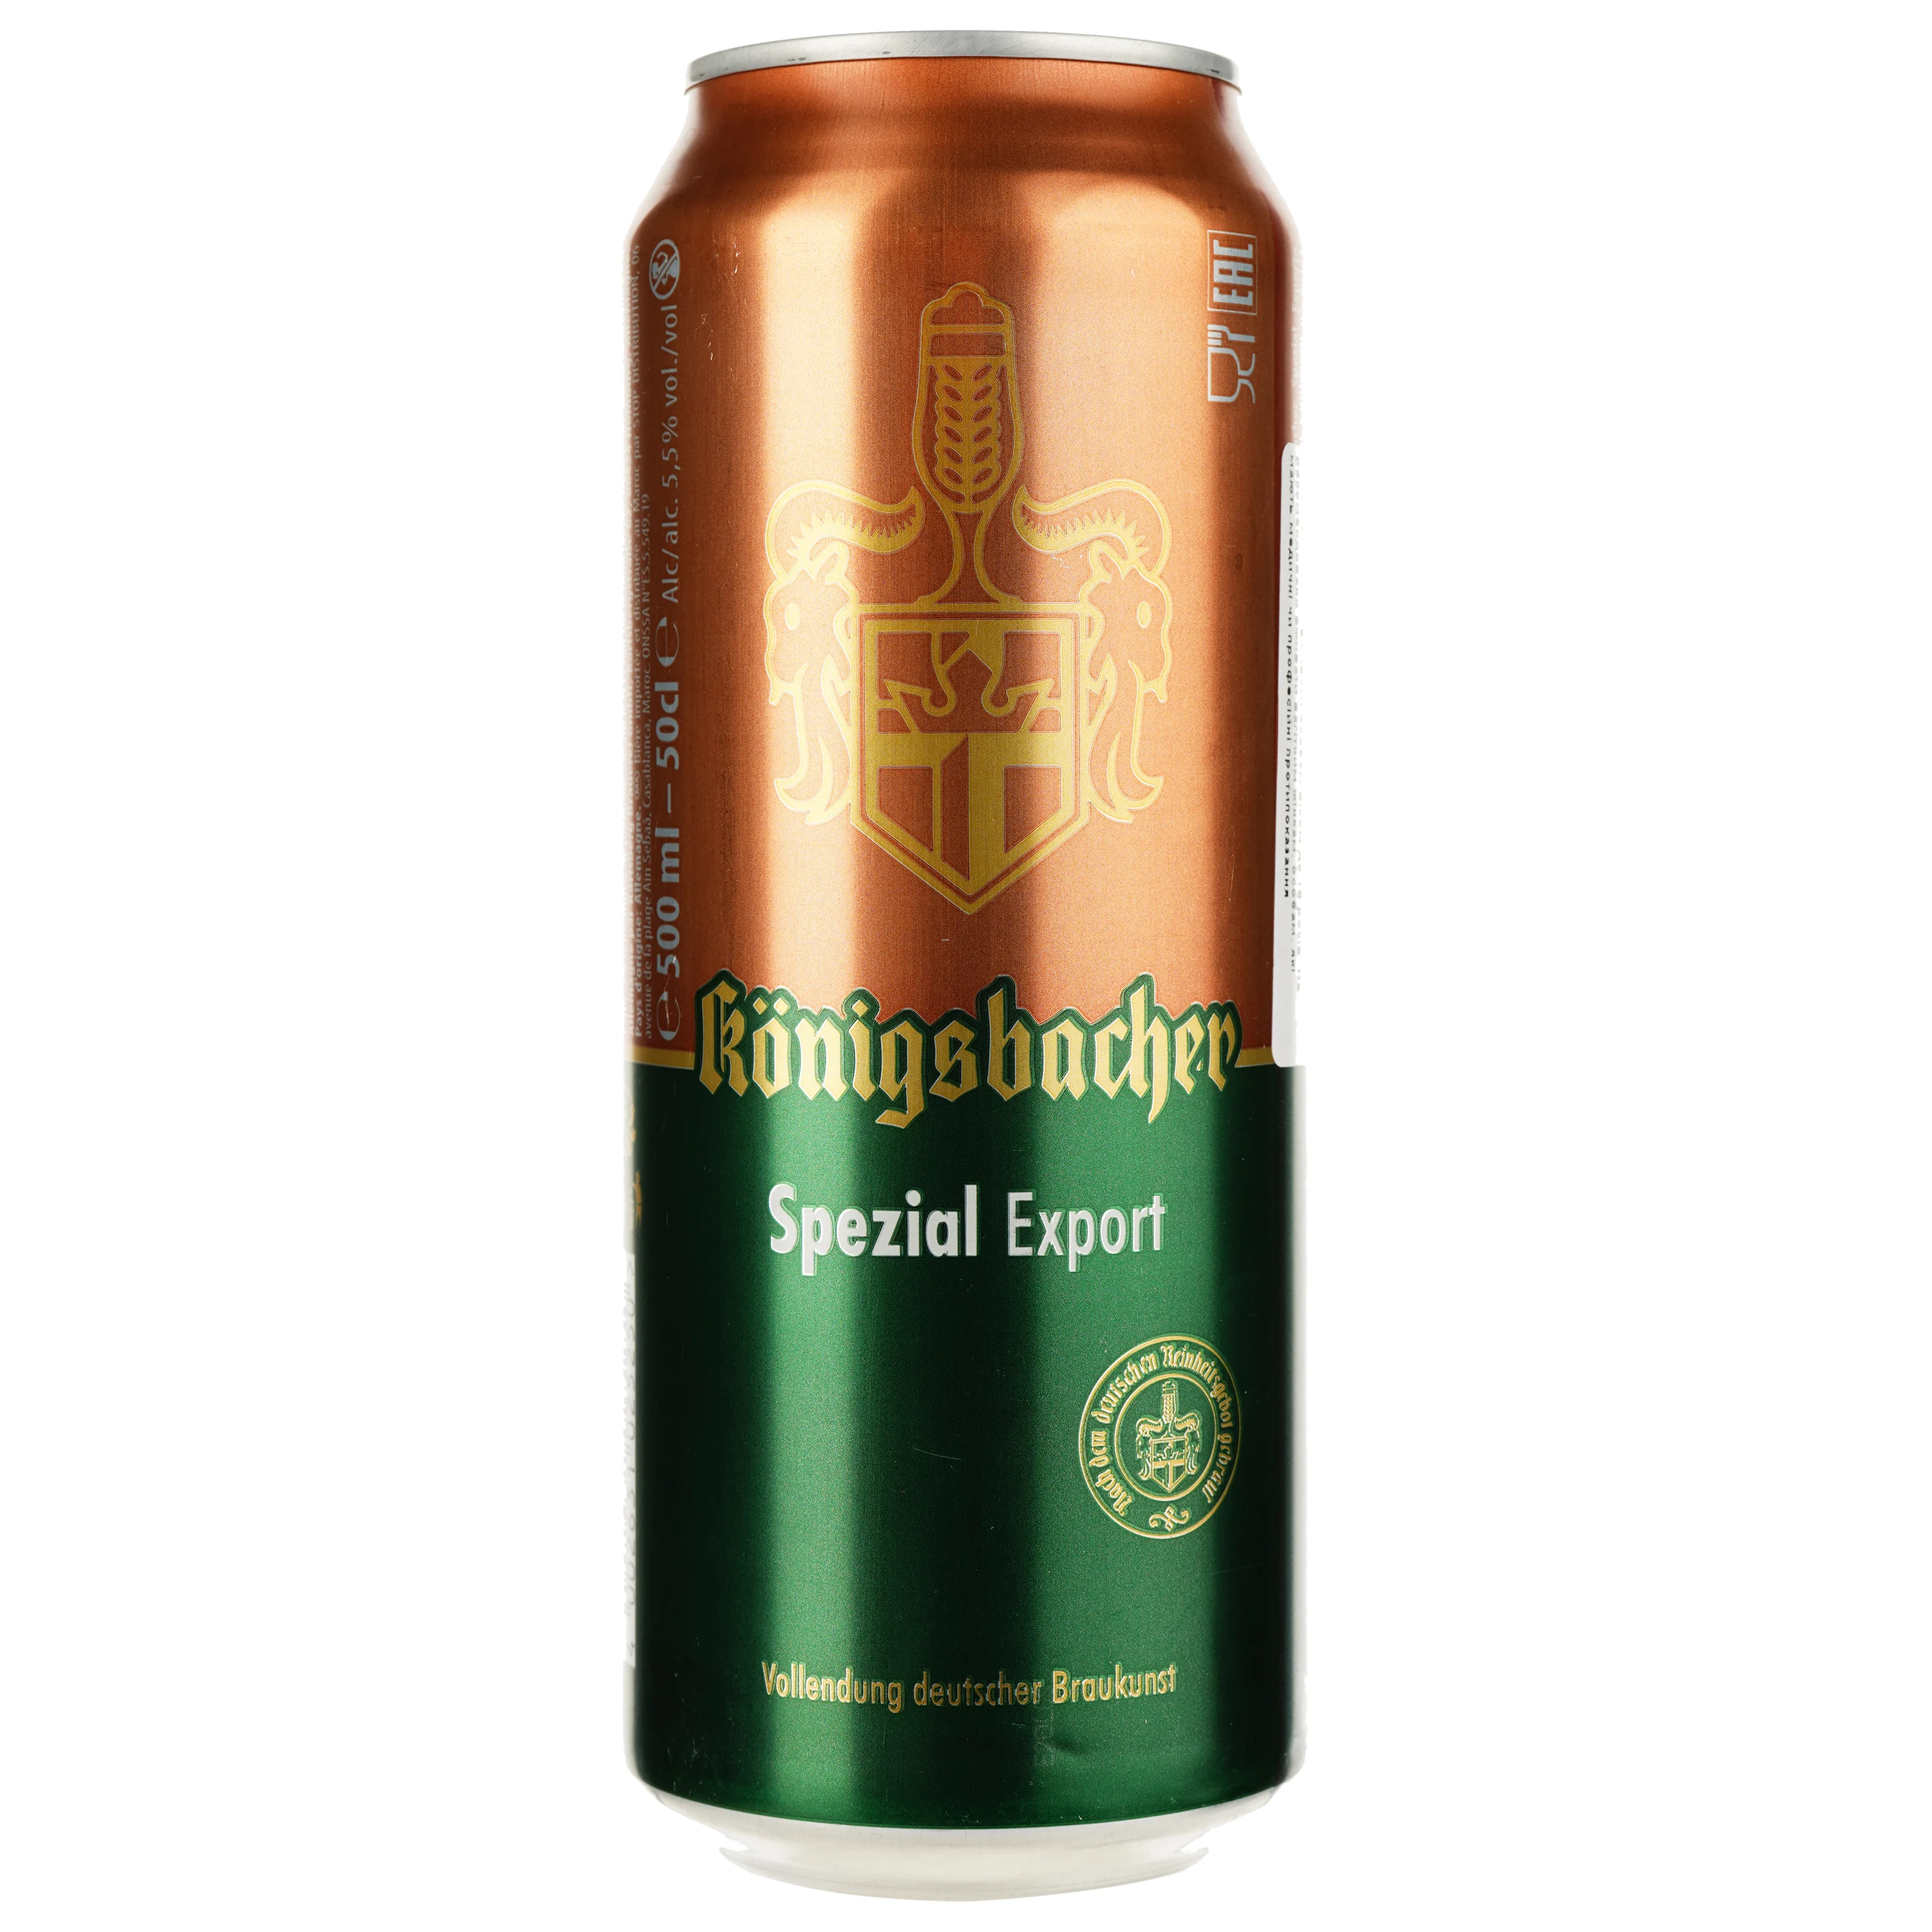 Пиво Konigsbacher 0,5лPils Drit 4,6% ж/б